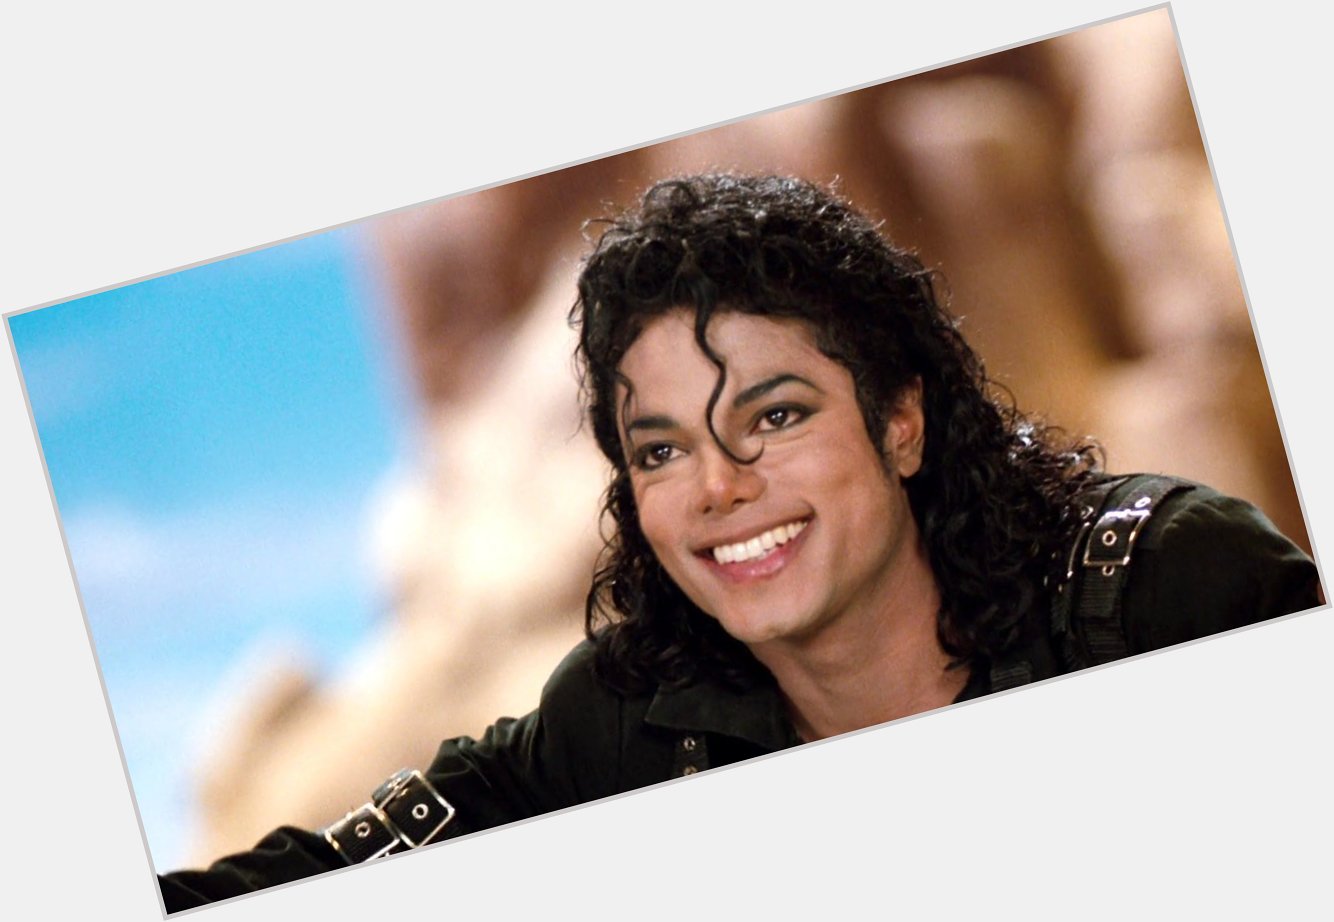 Michael Jackson. 
29 août 1958 - 25 juin 2009.
Happy birthday KING! 